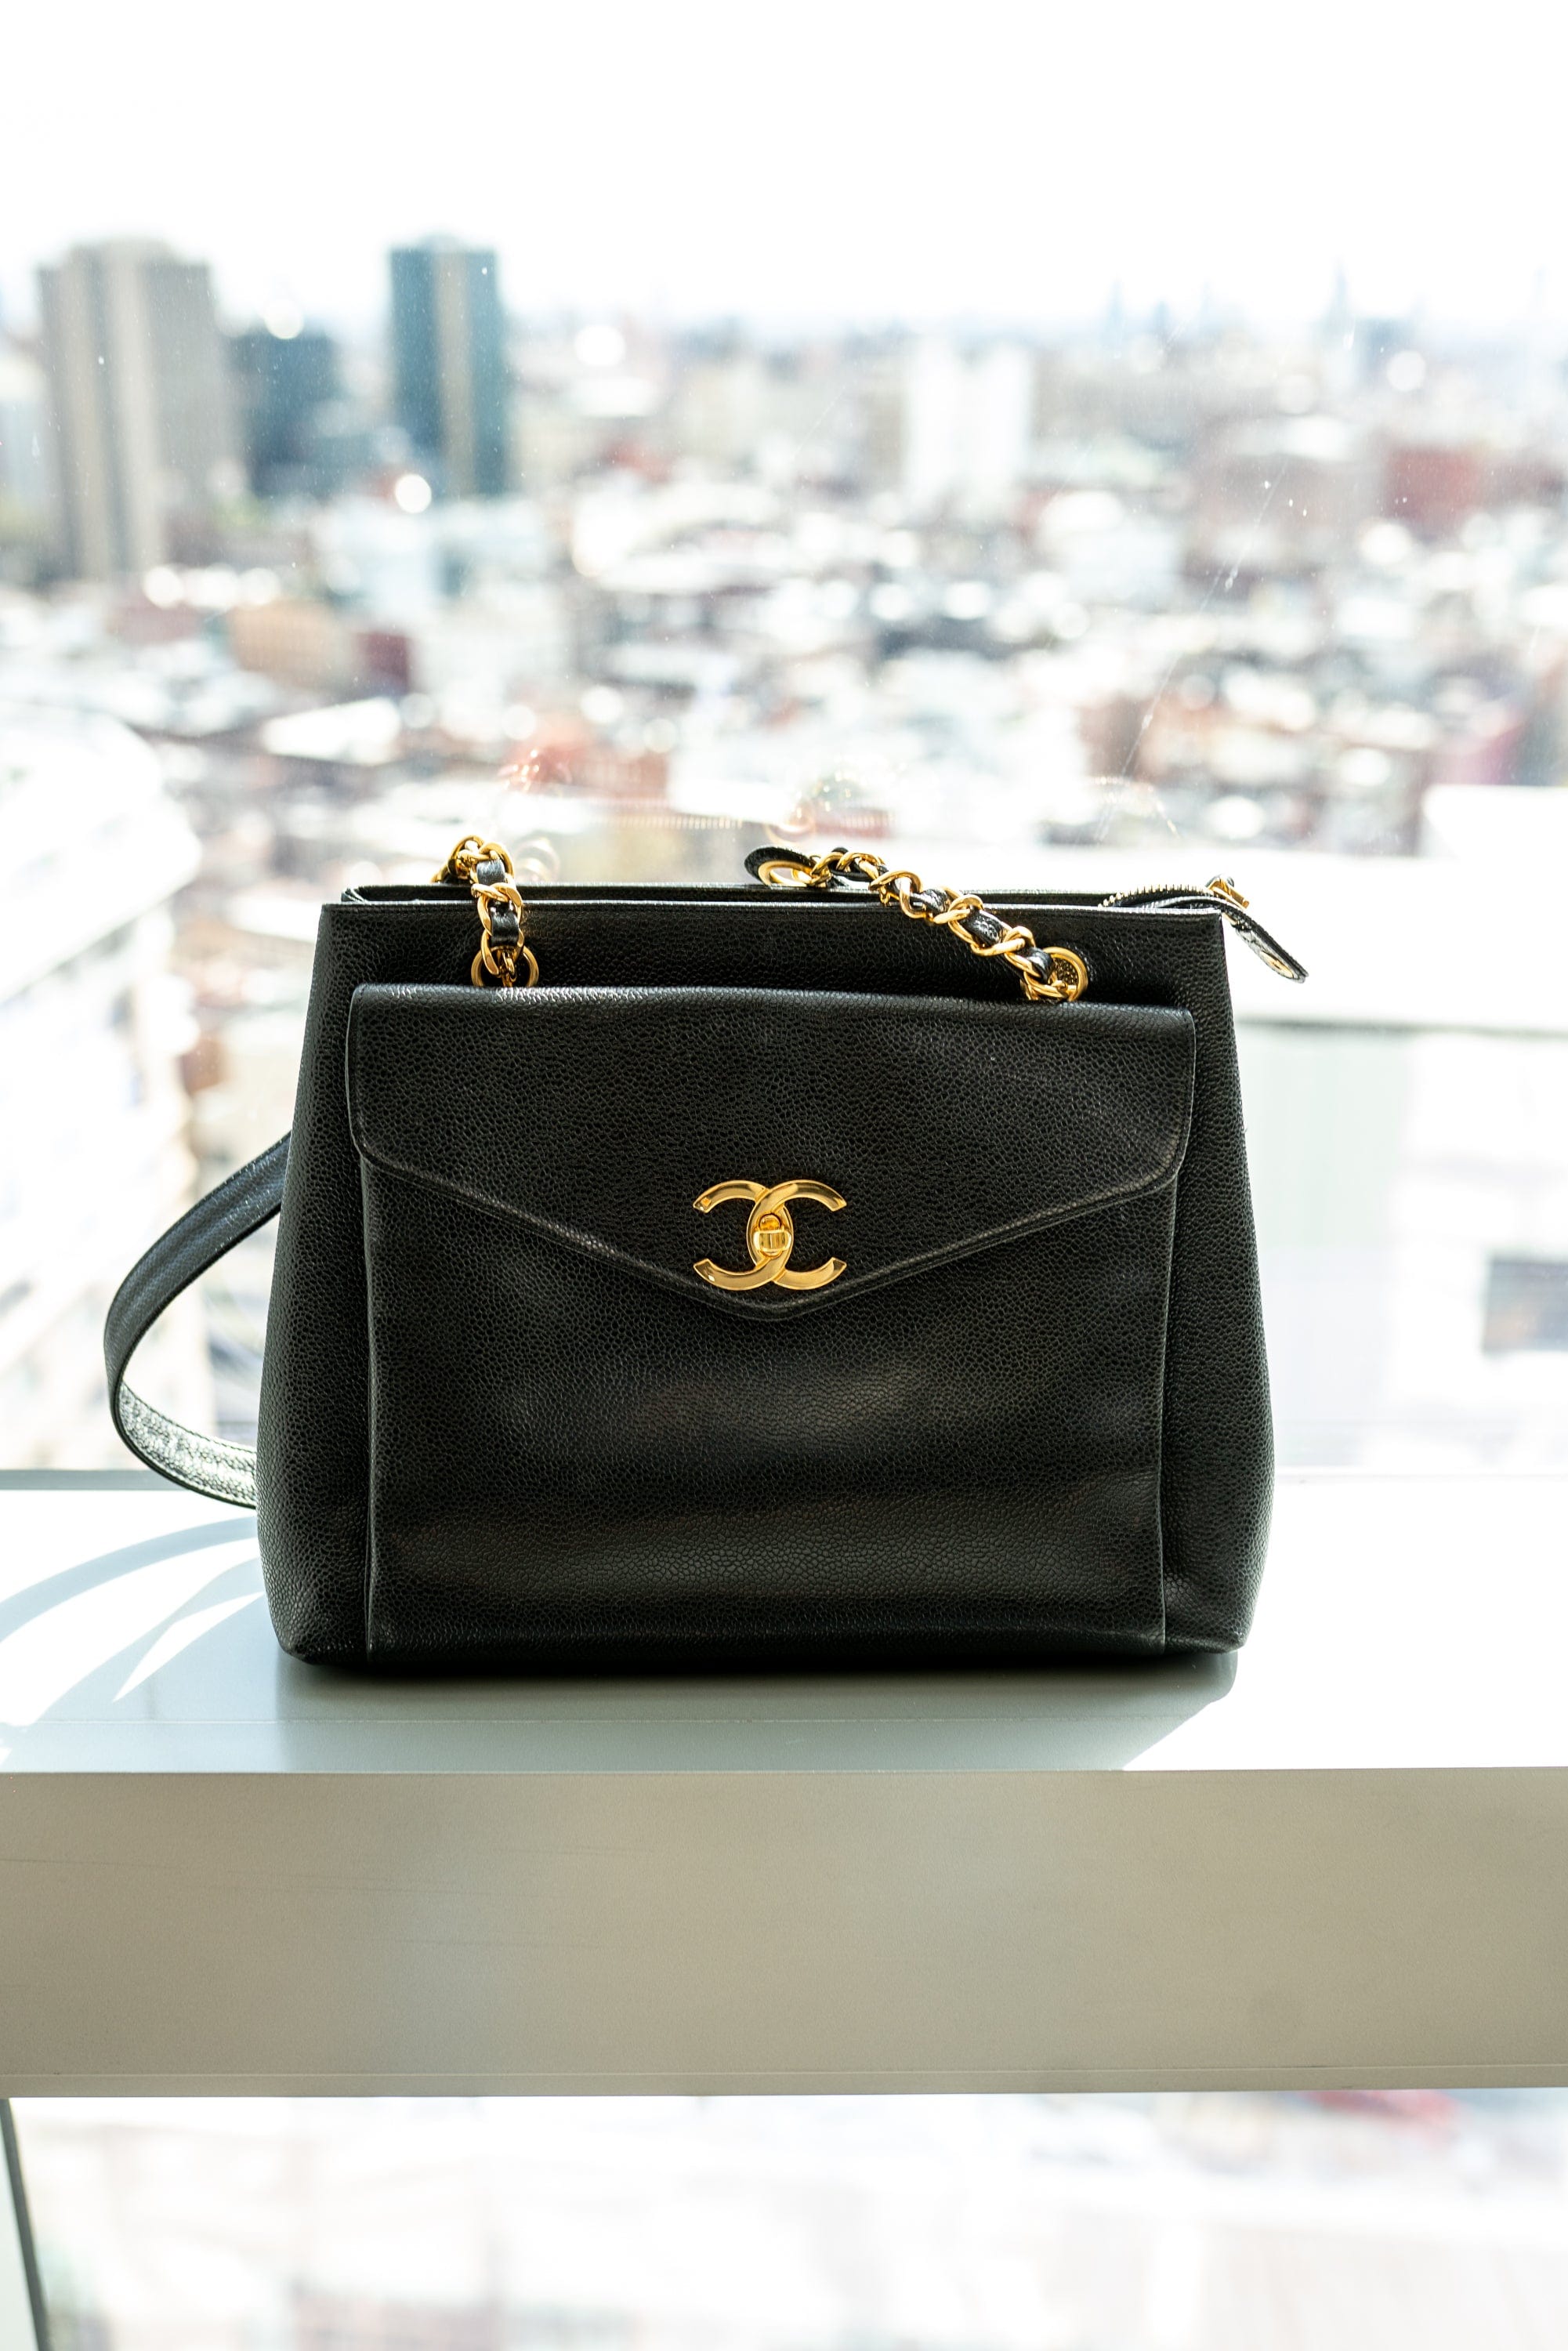 Chanel Bags, Chanel Handbags for Sale